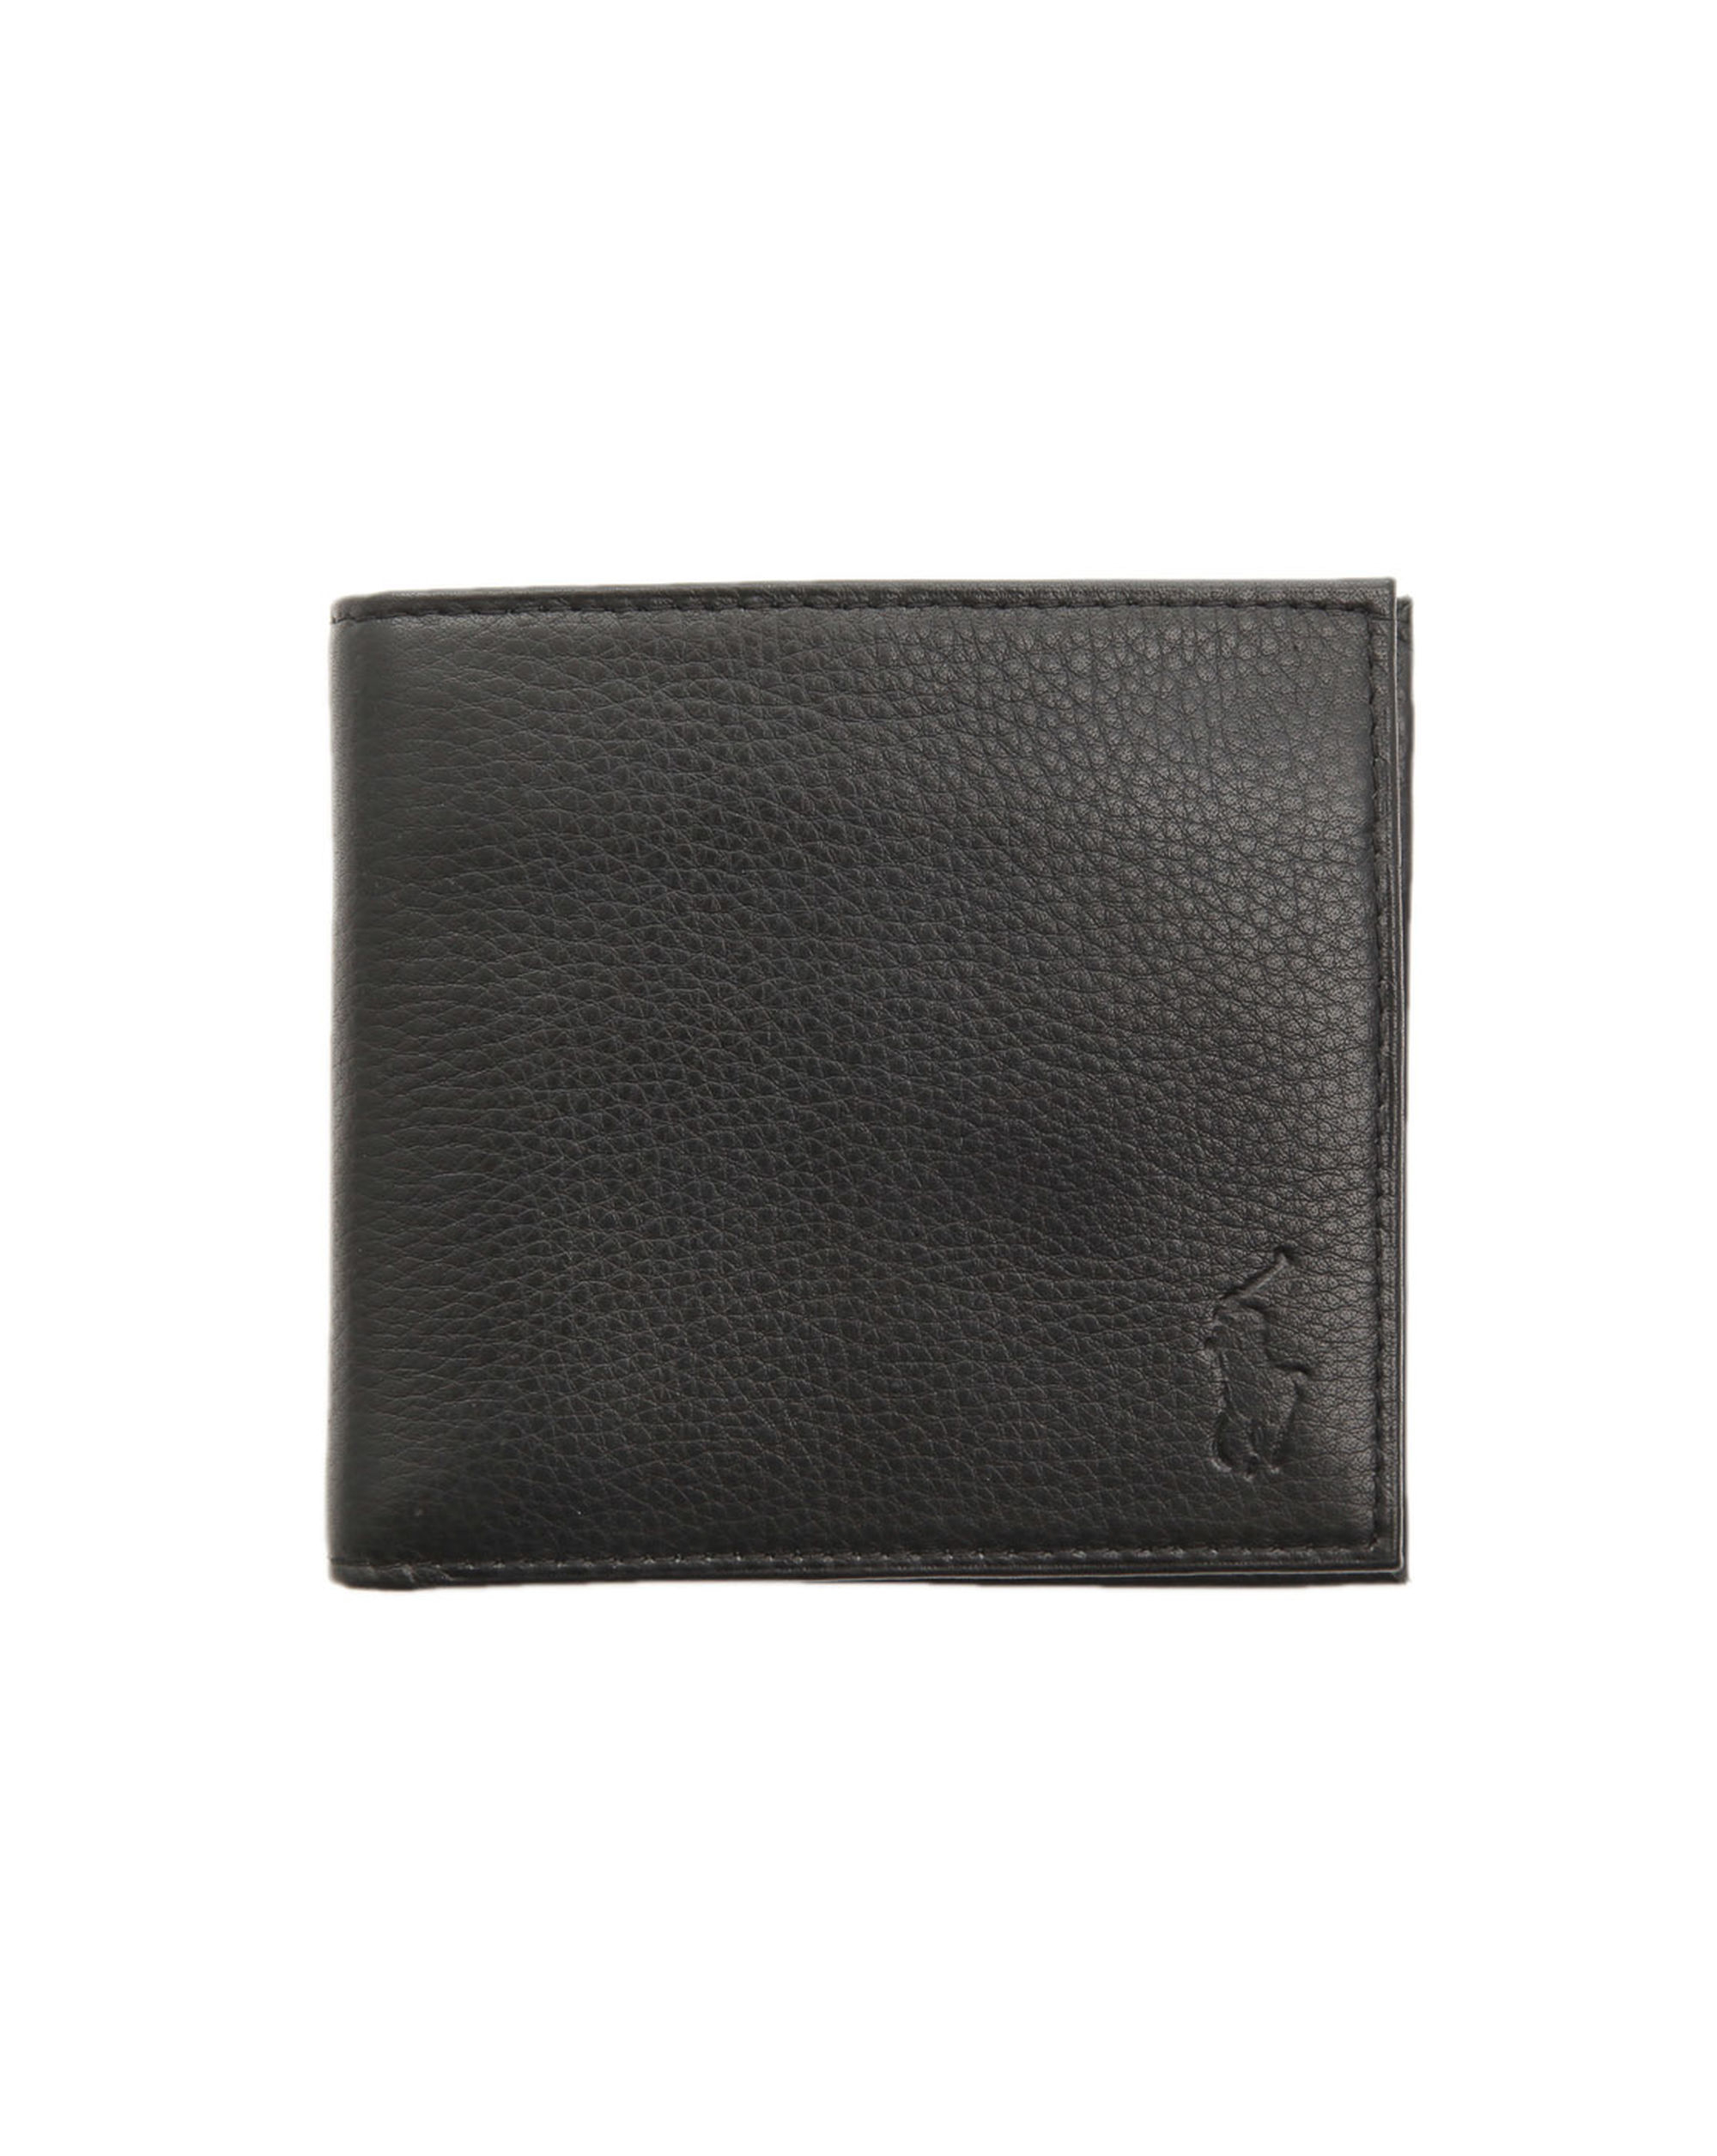 Polo Ralph Lauren Mens Trifold Leather Wallet Black | NAR Media Kit